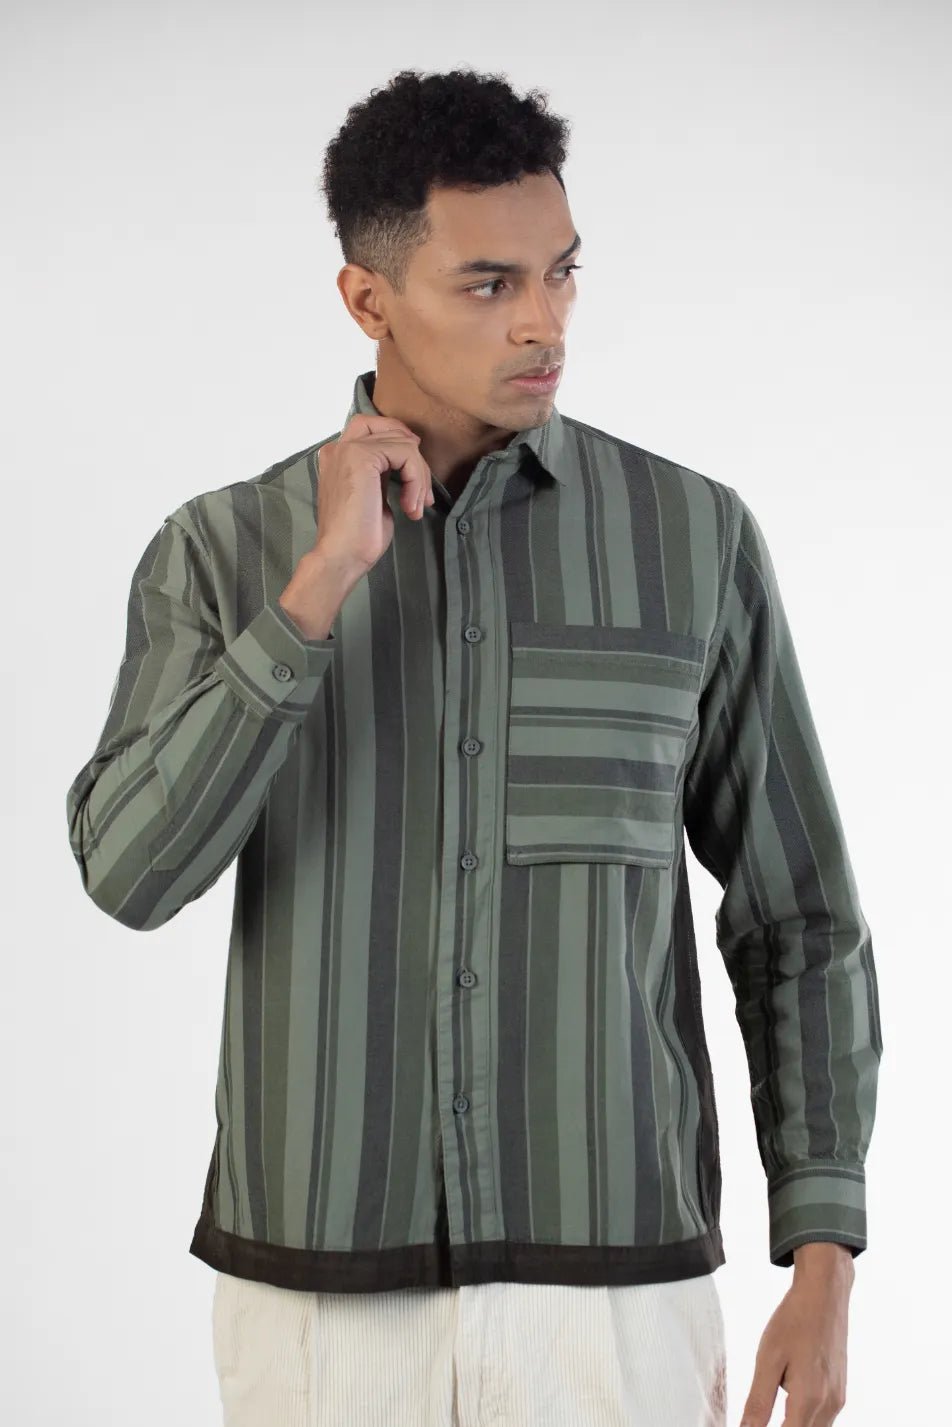 Buy Oxford Cargo Pocket Striped Shirt Online.